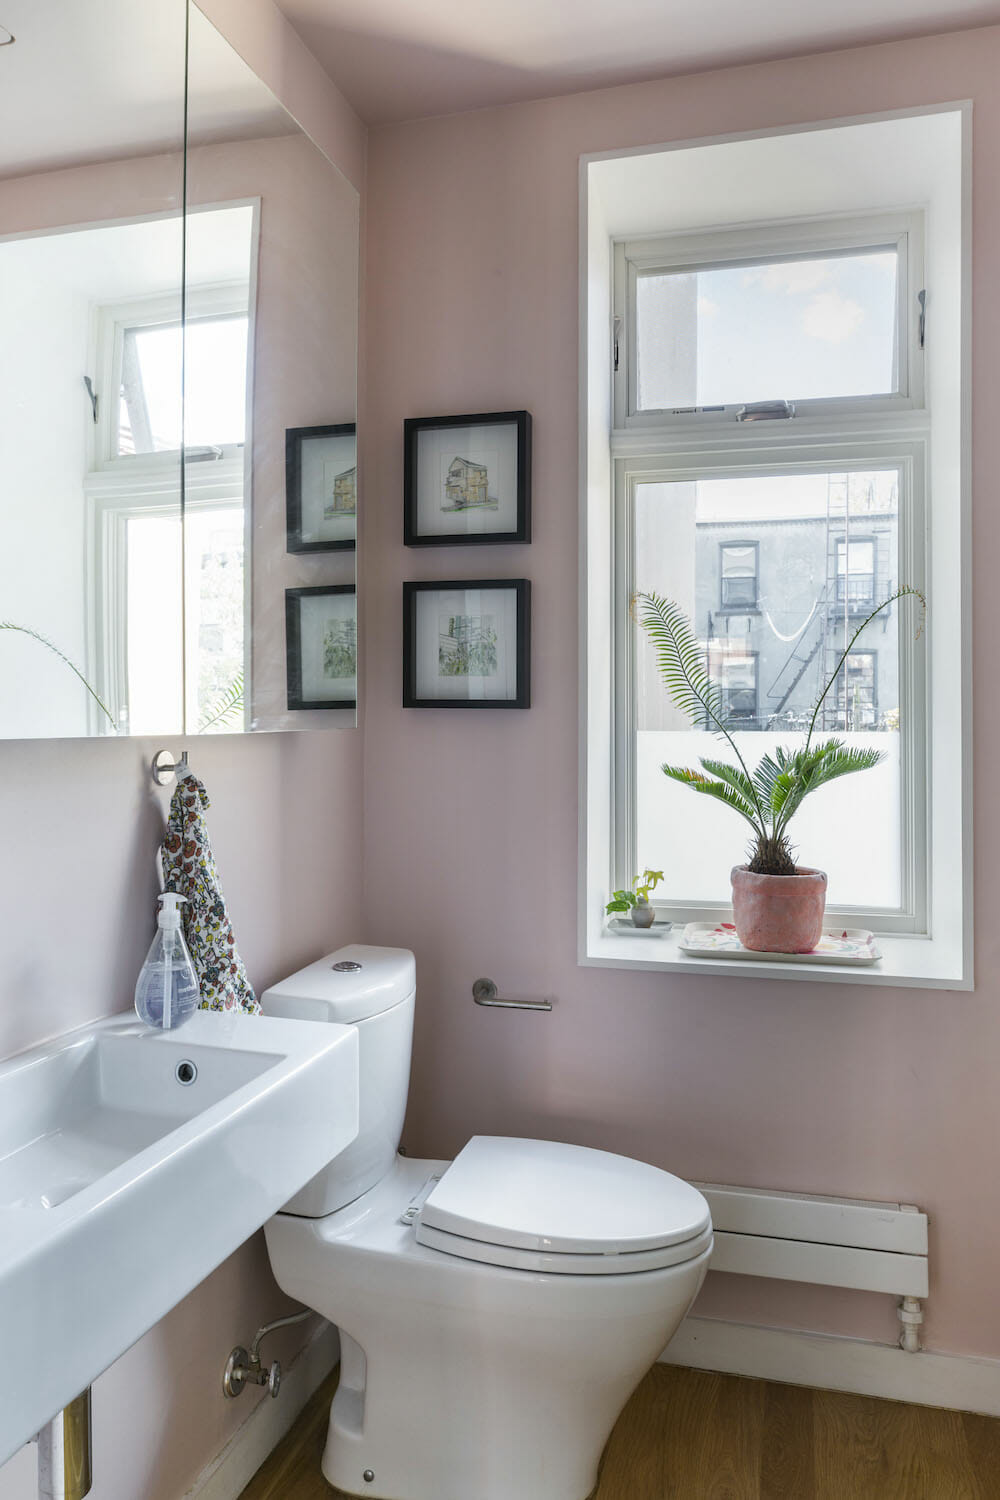 modern pink bathroom